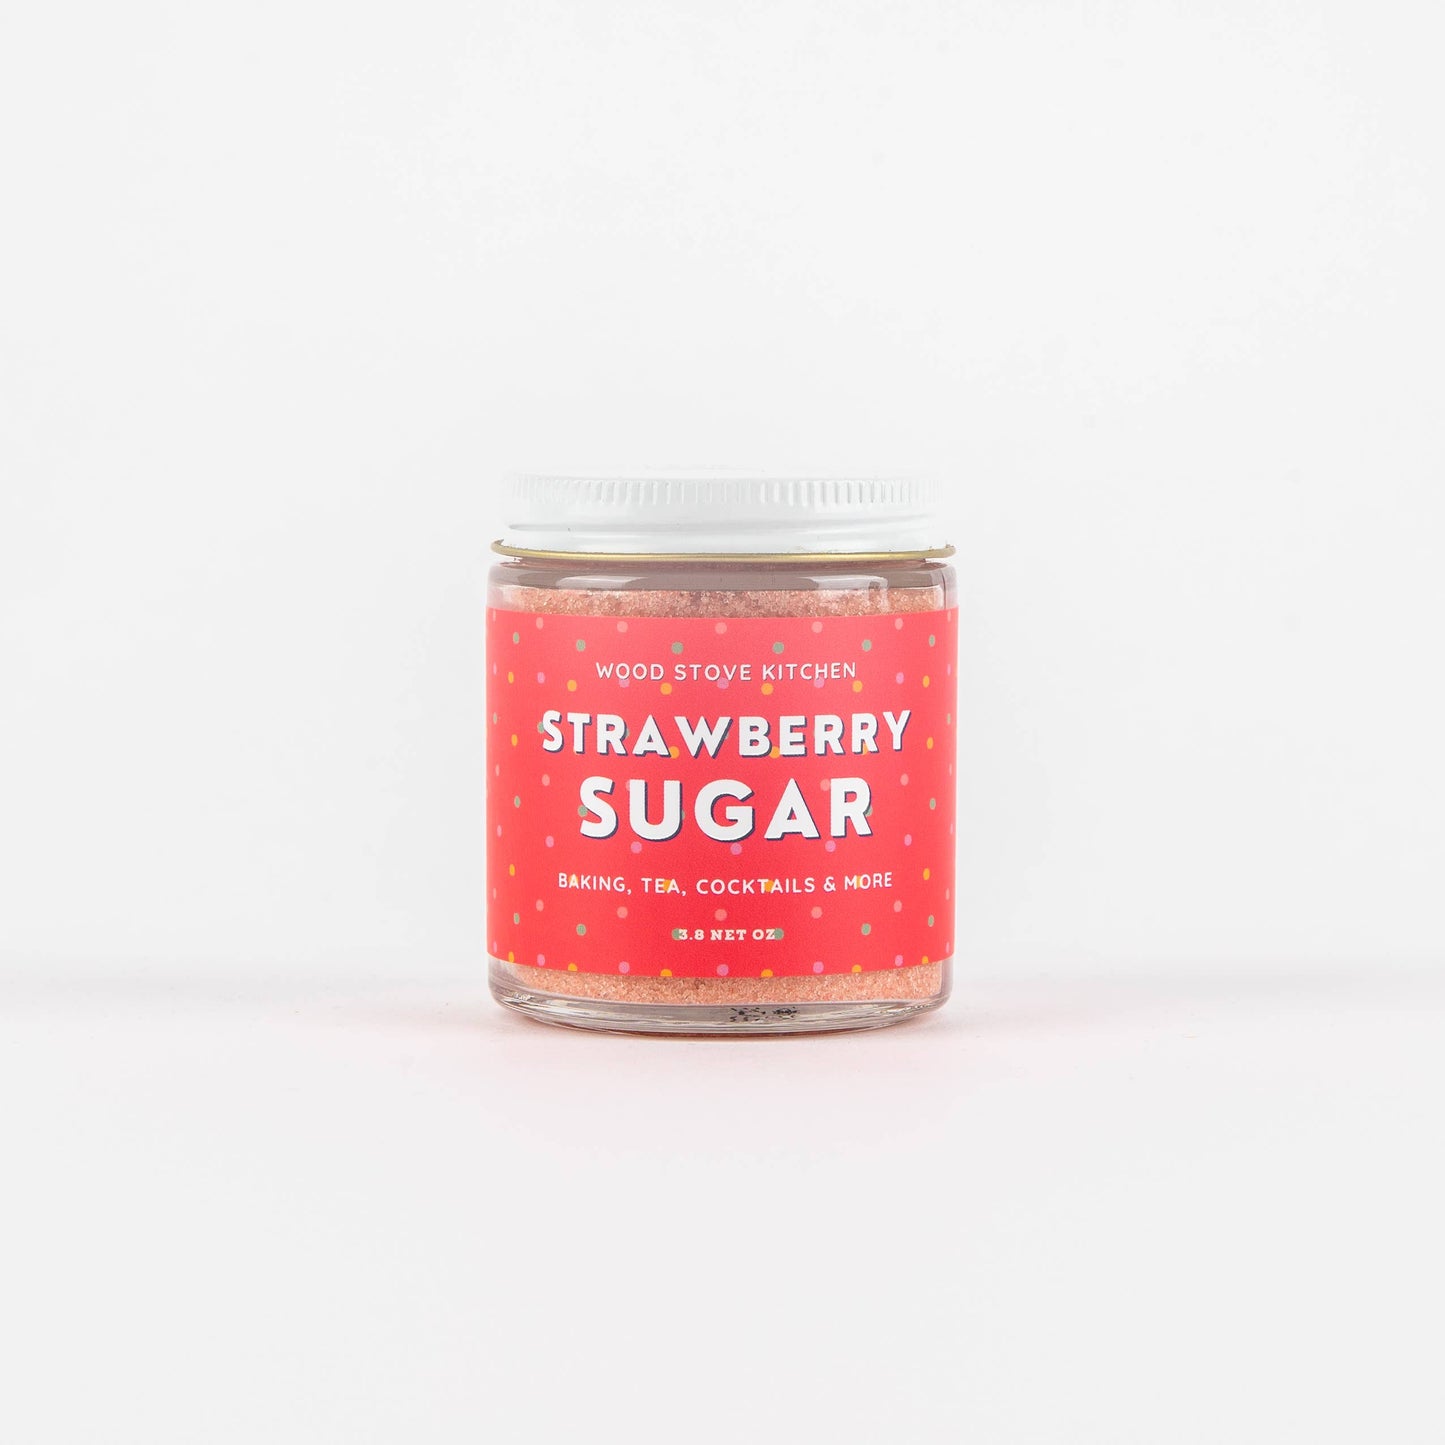 Strawberry Sugar, 3.8 Net Oz